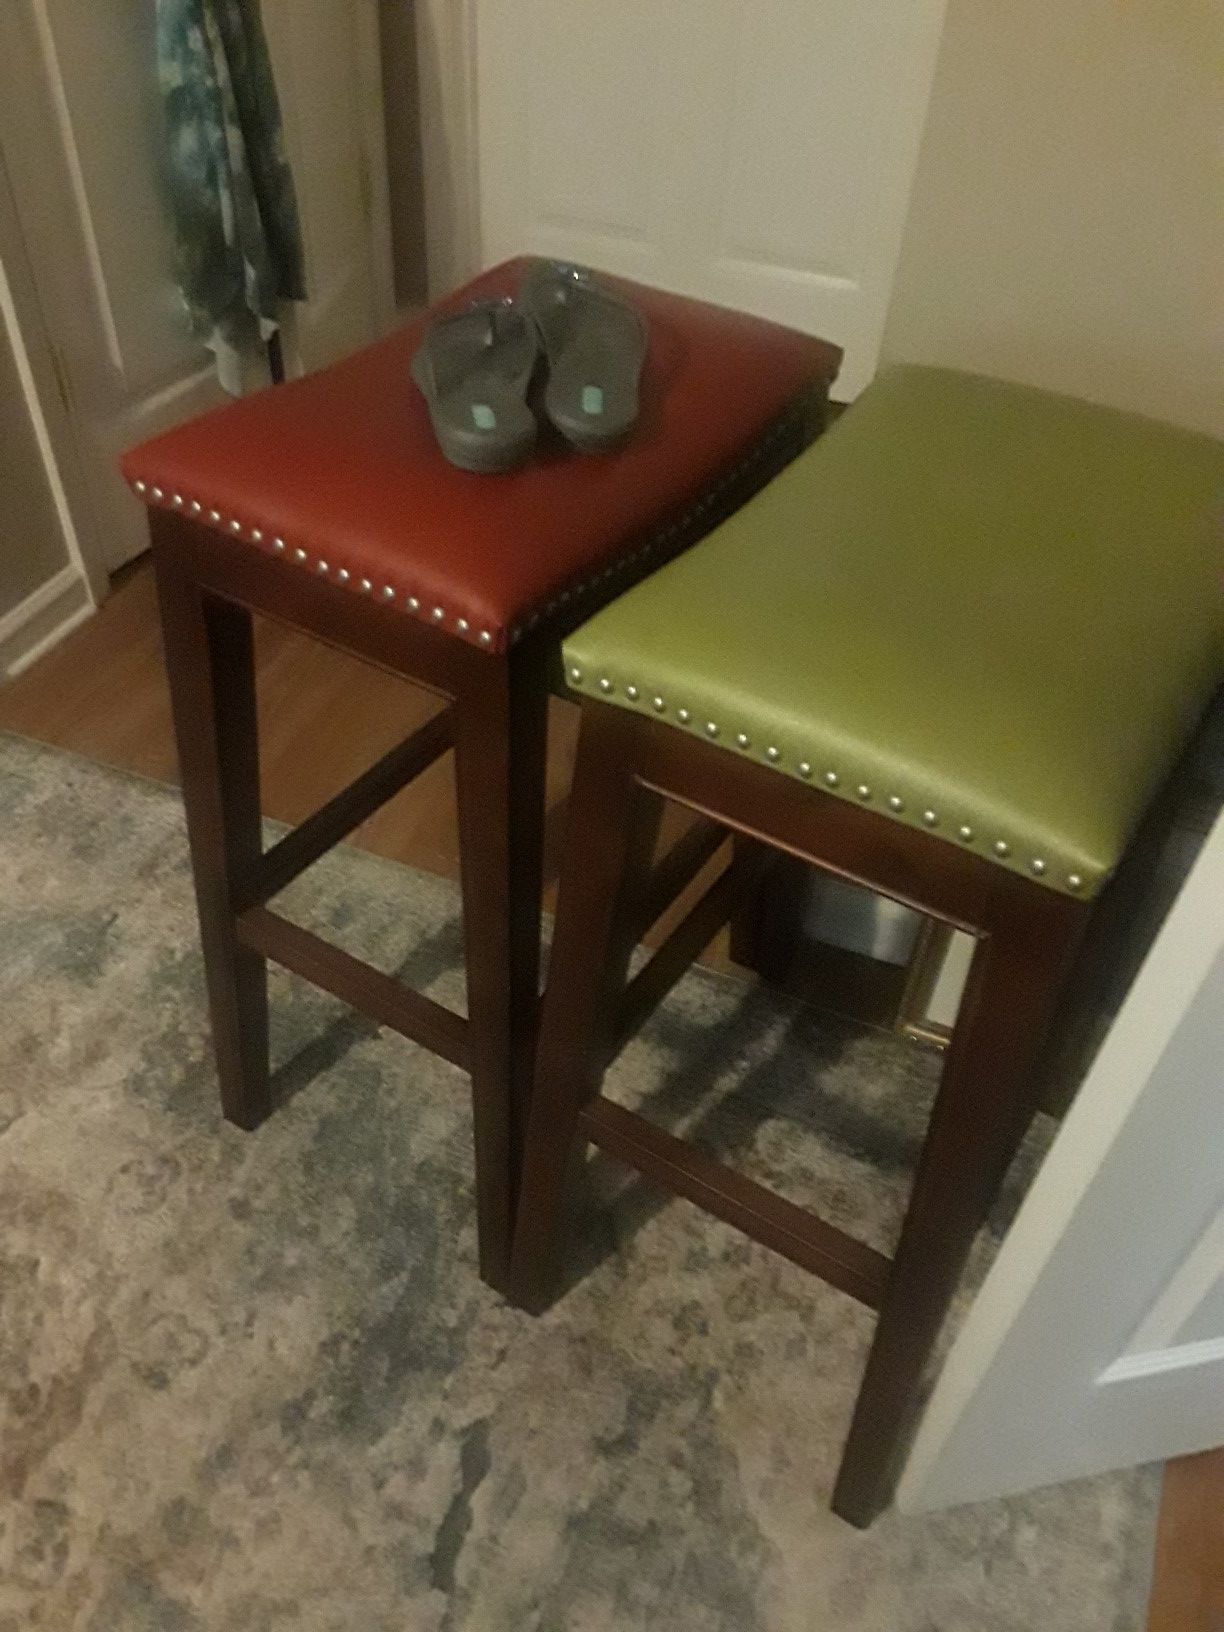 2 nice bar stools